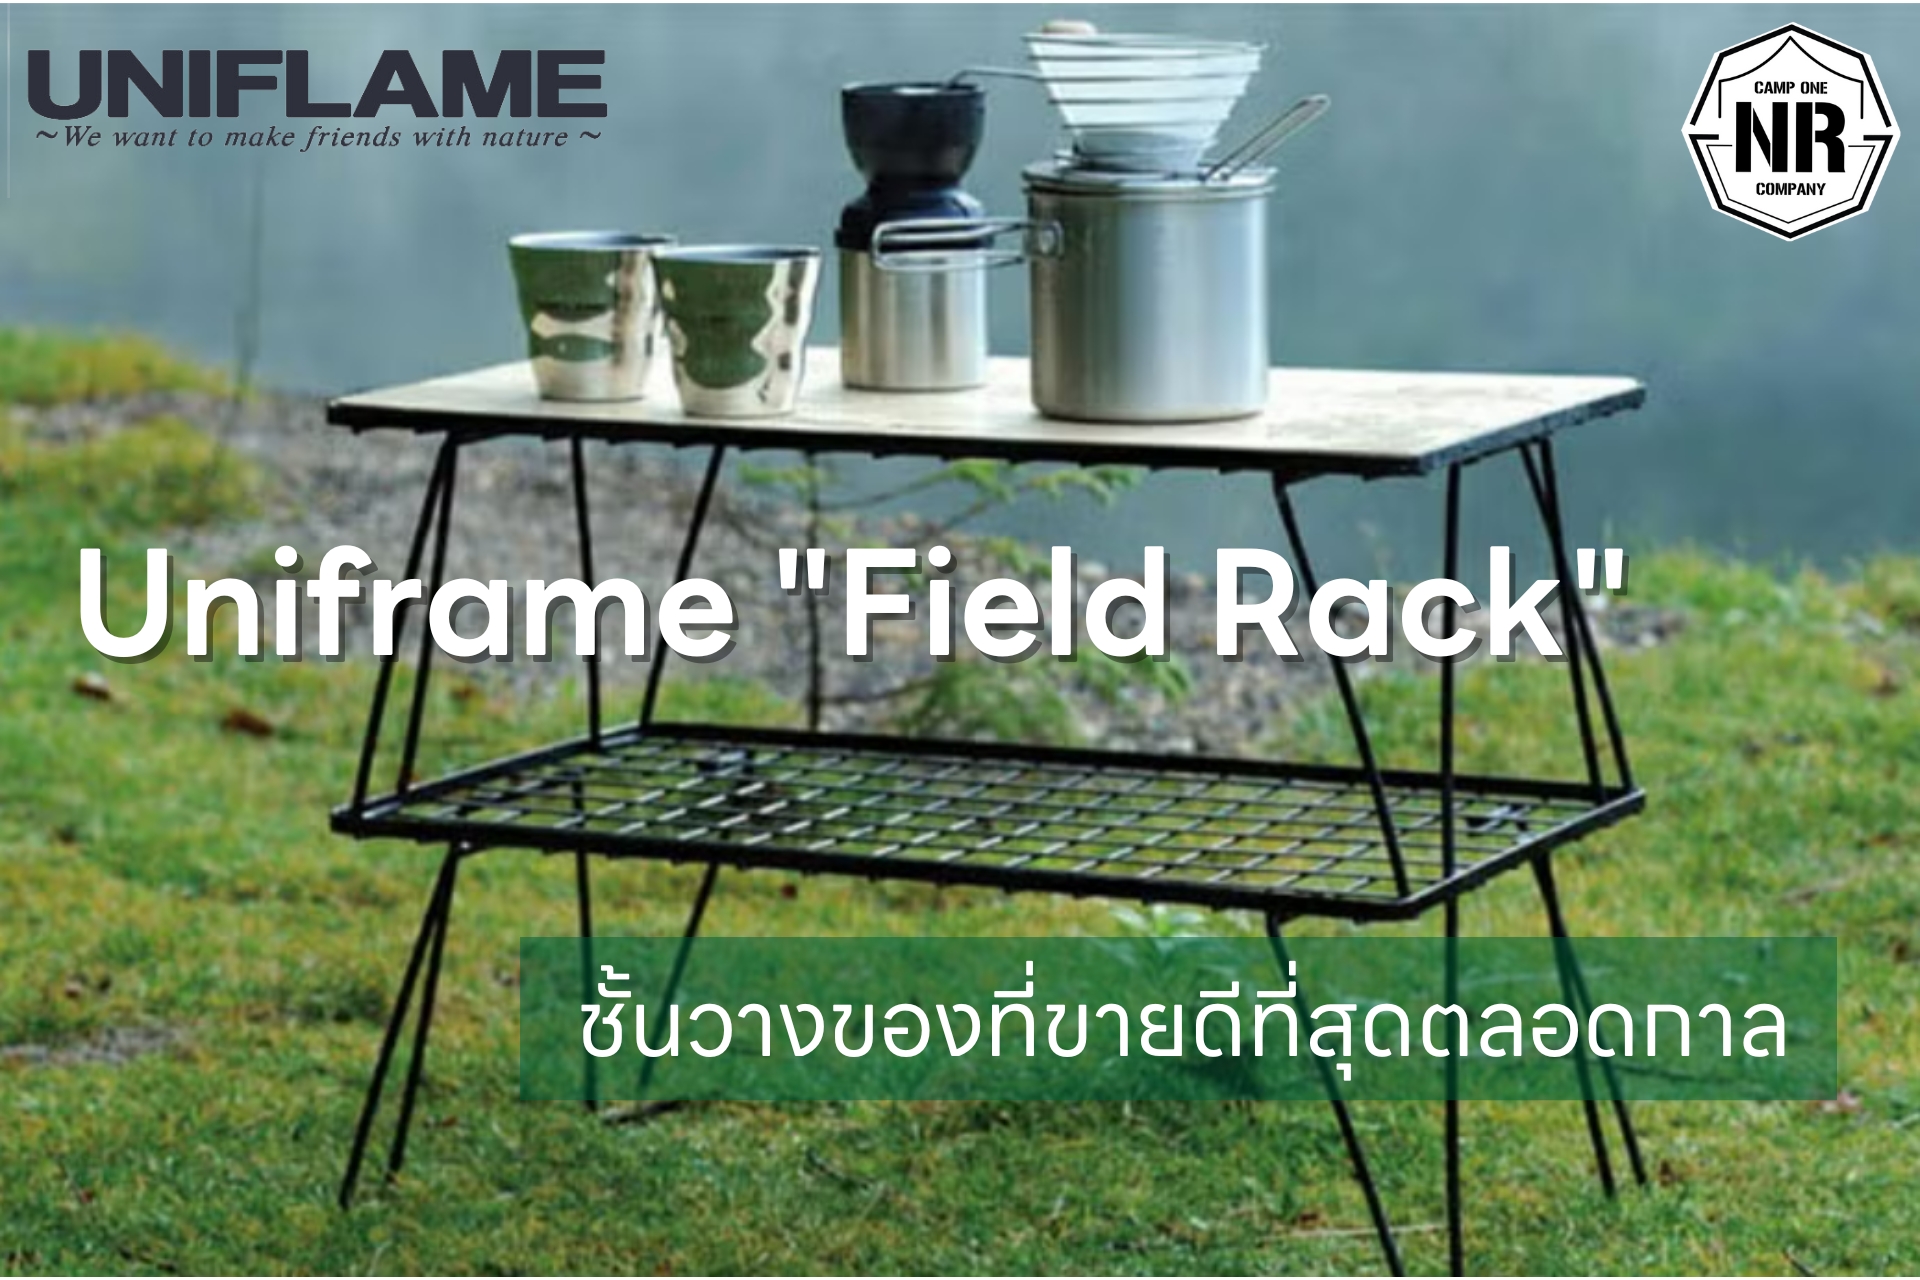 Uniframe “Field Rack” ชั้นวางของที่ขายดีที่สุดตลอดกาล